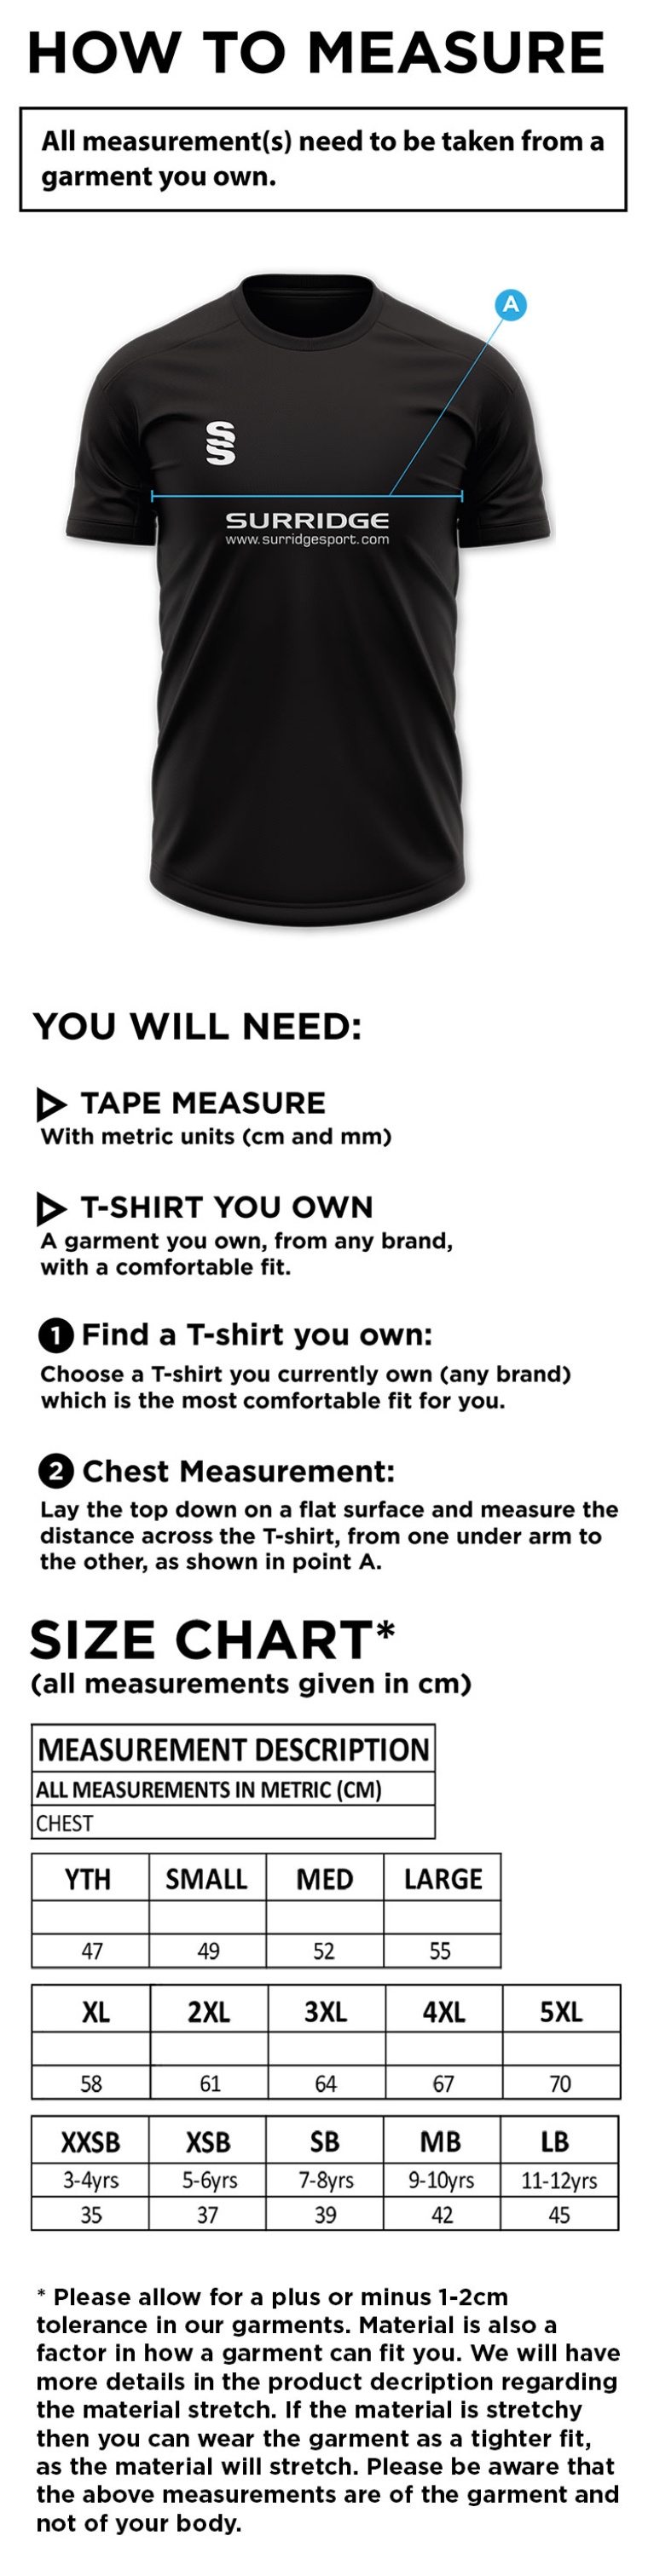 Blagdon CC - Blade Training Shirt - Size Guide